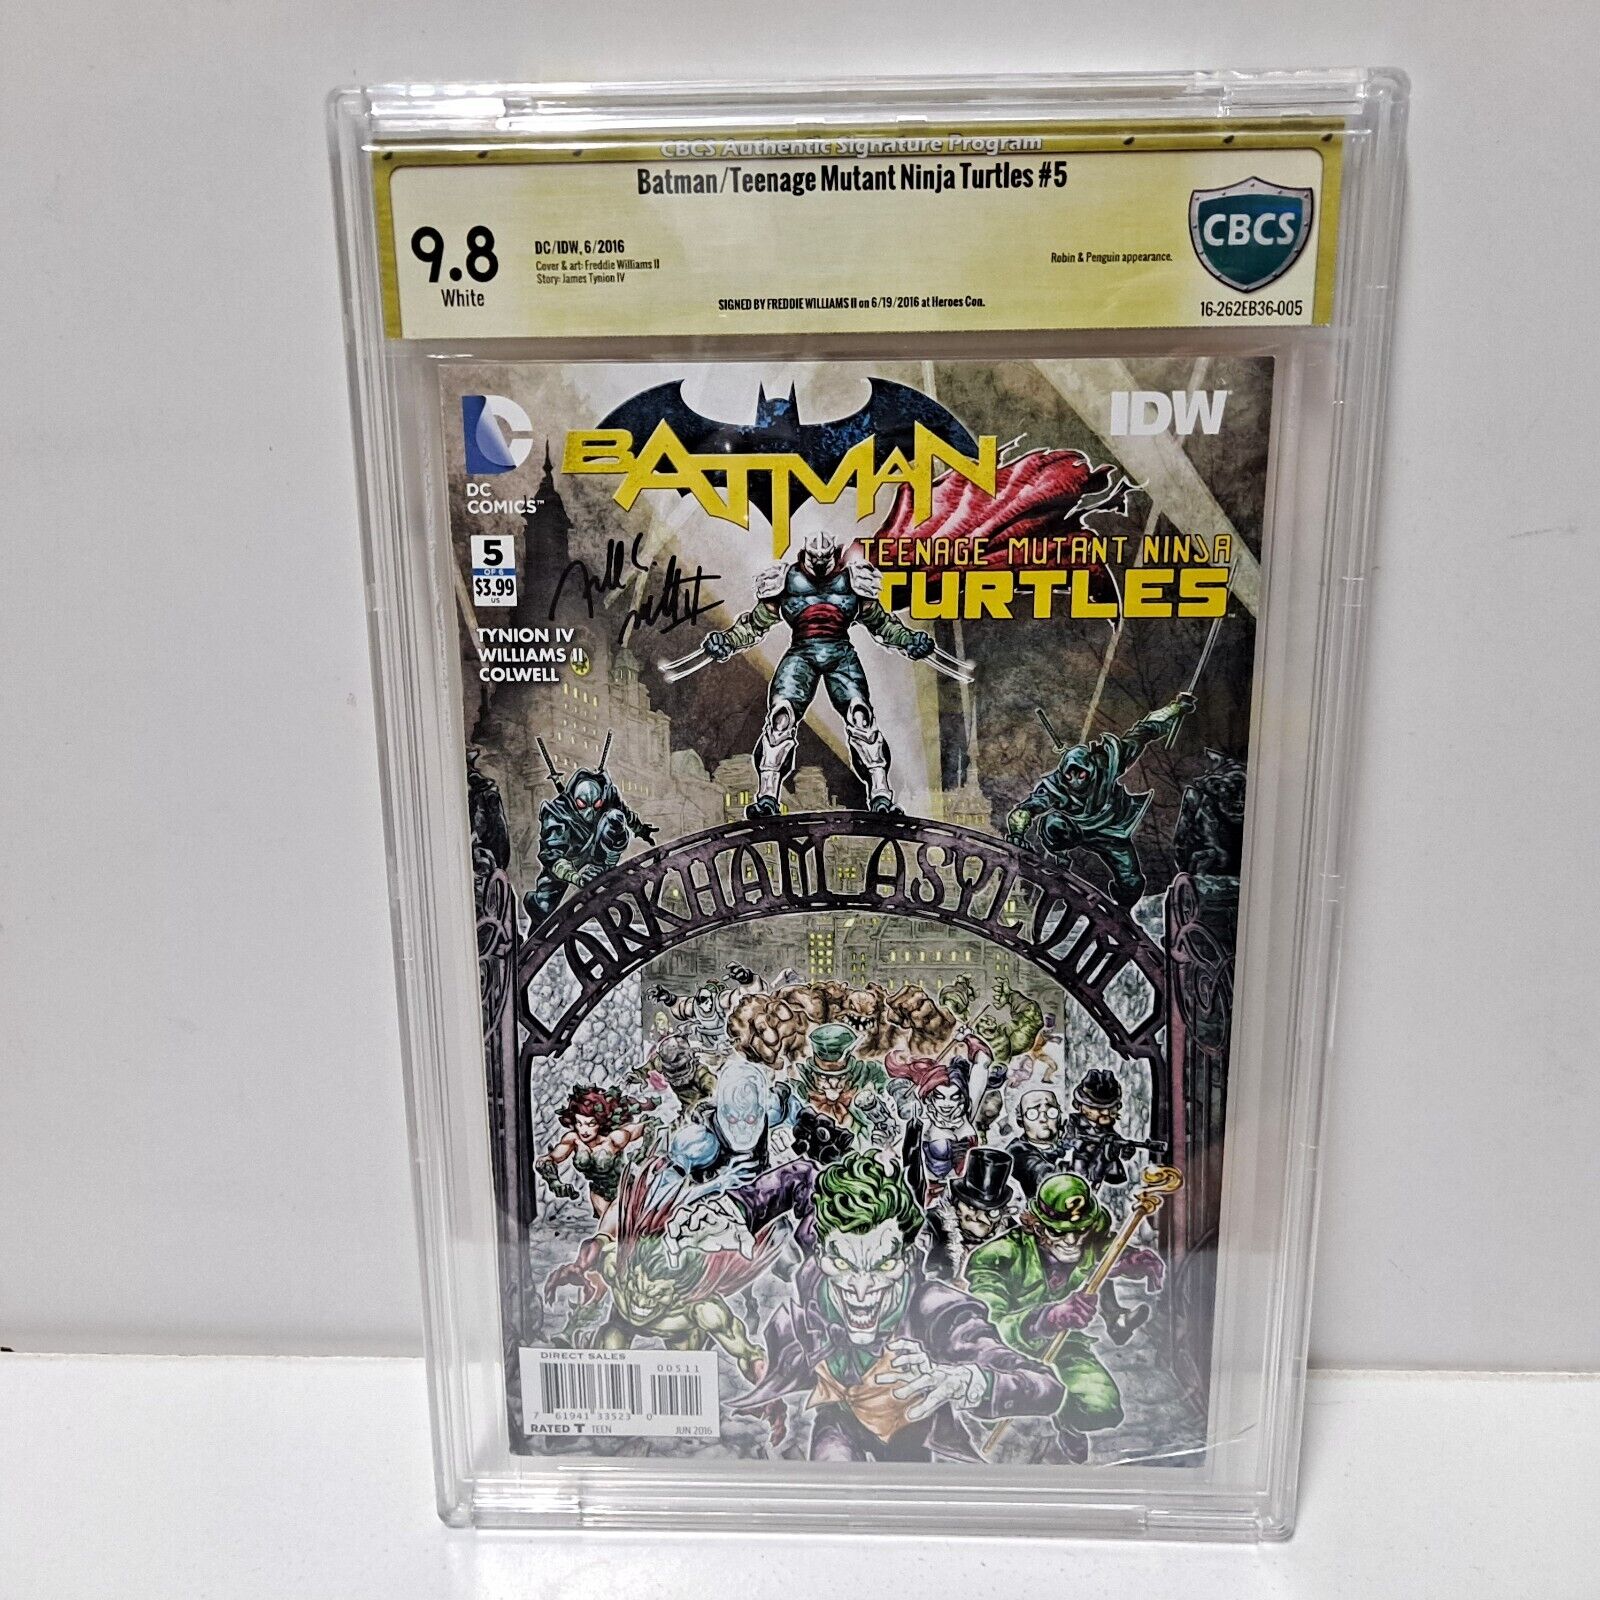 Batman Teenage Mutant Ninja Turtles #5 DC/IDW CBCS 9.8 Signature Series